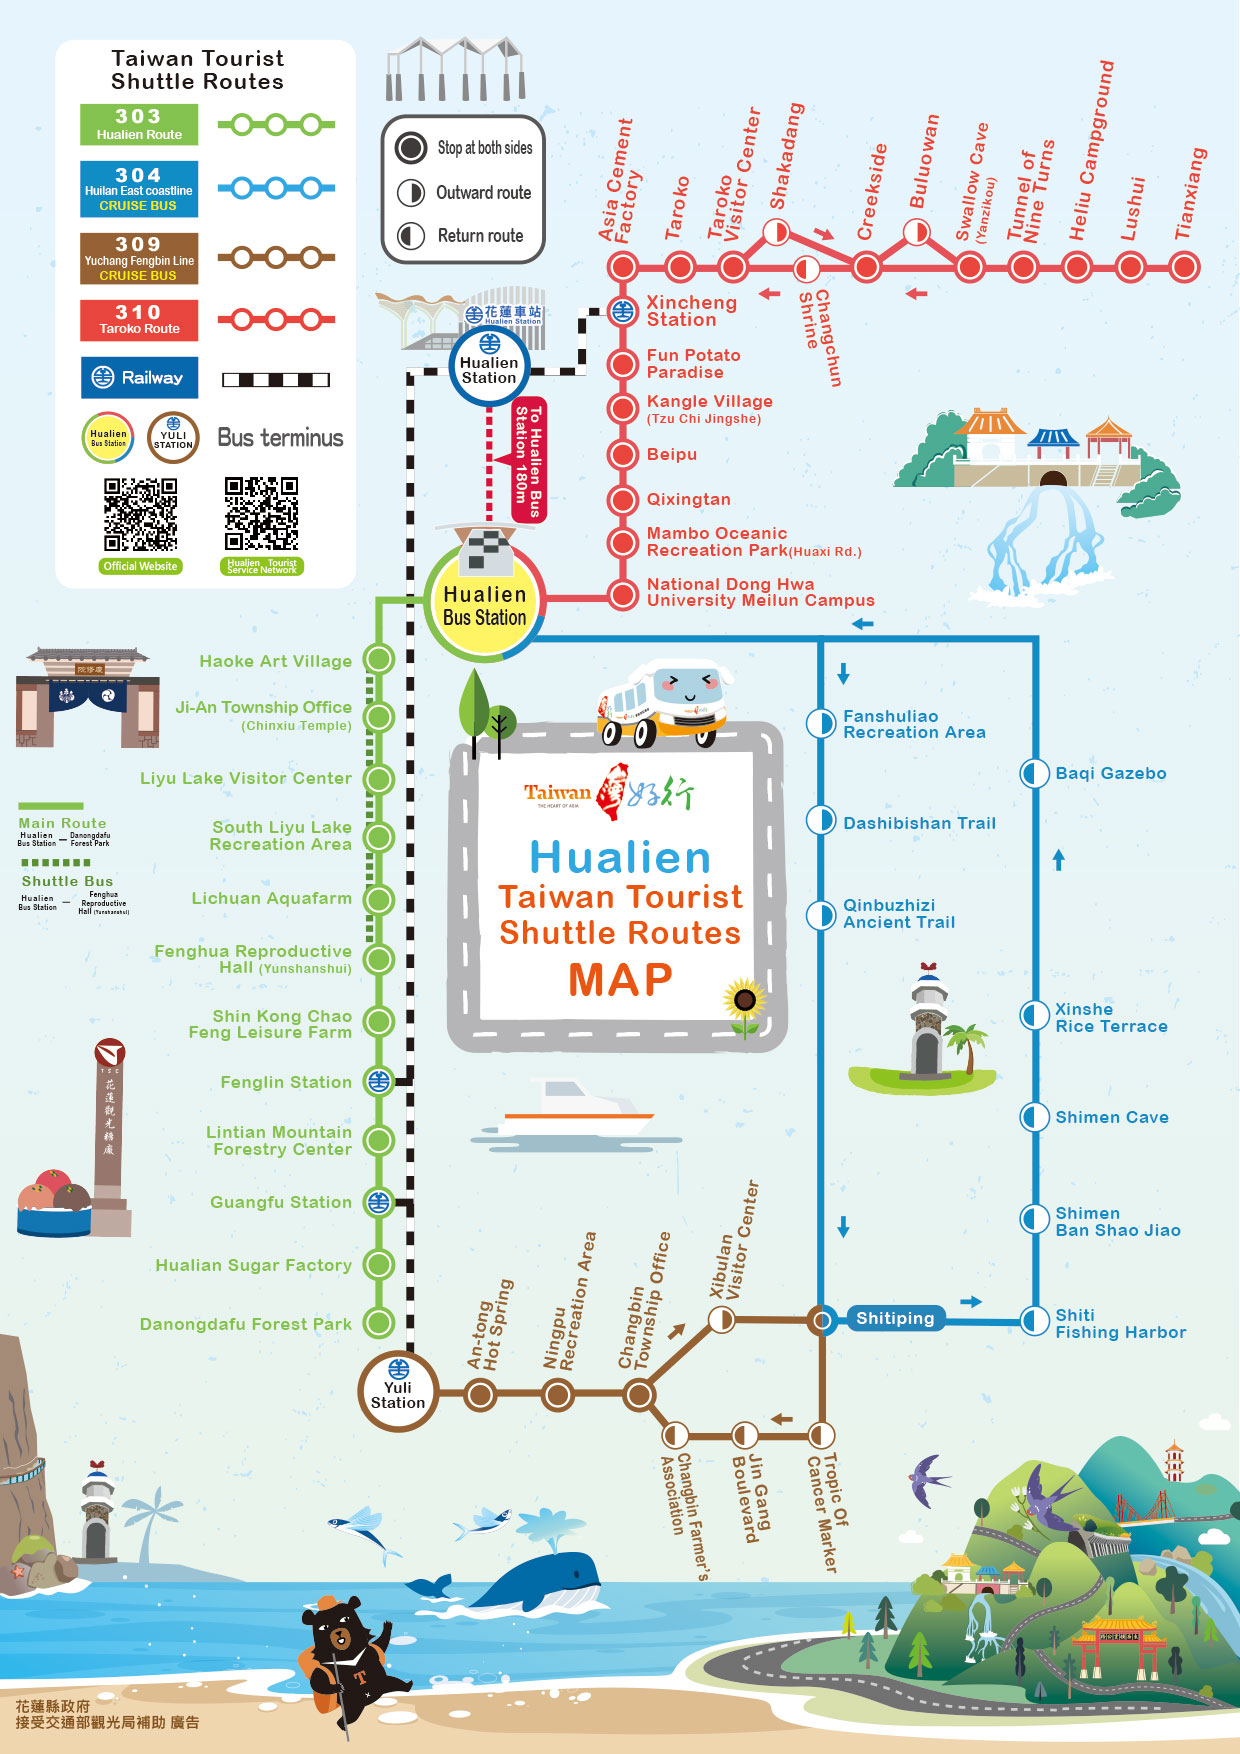 Hualien Taiwan Tourist Shuttle Routes